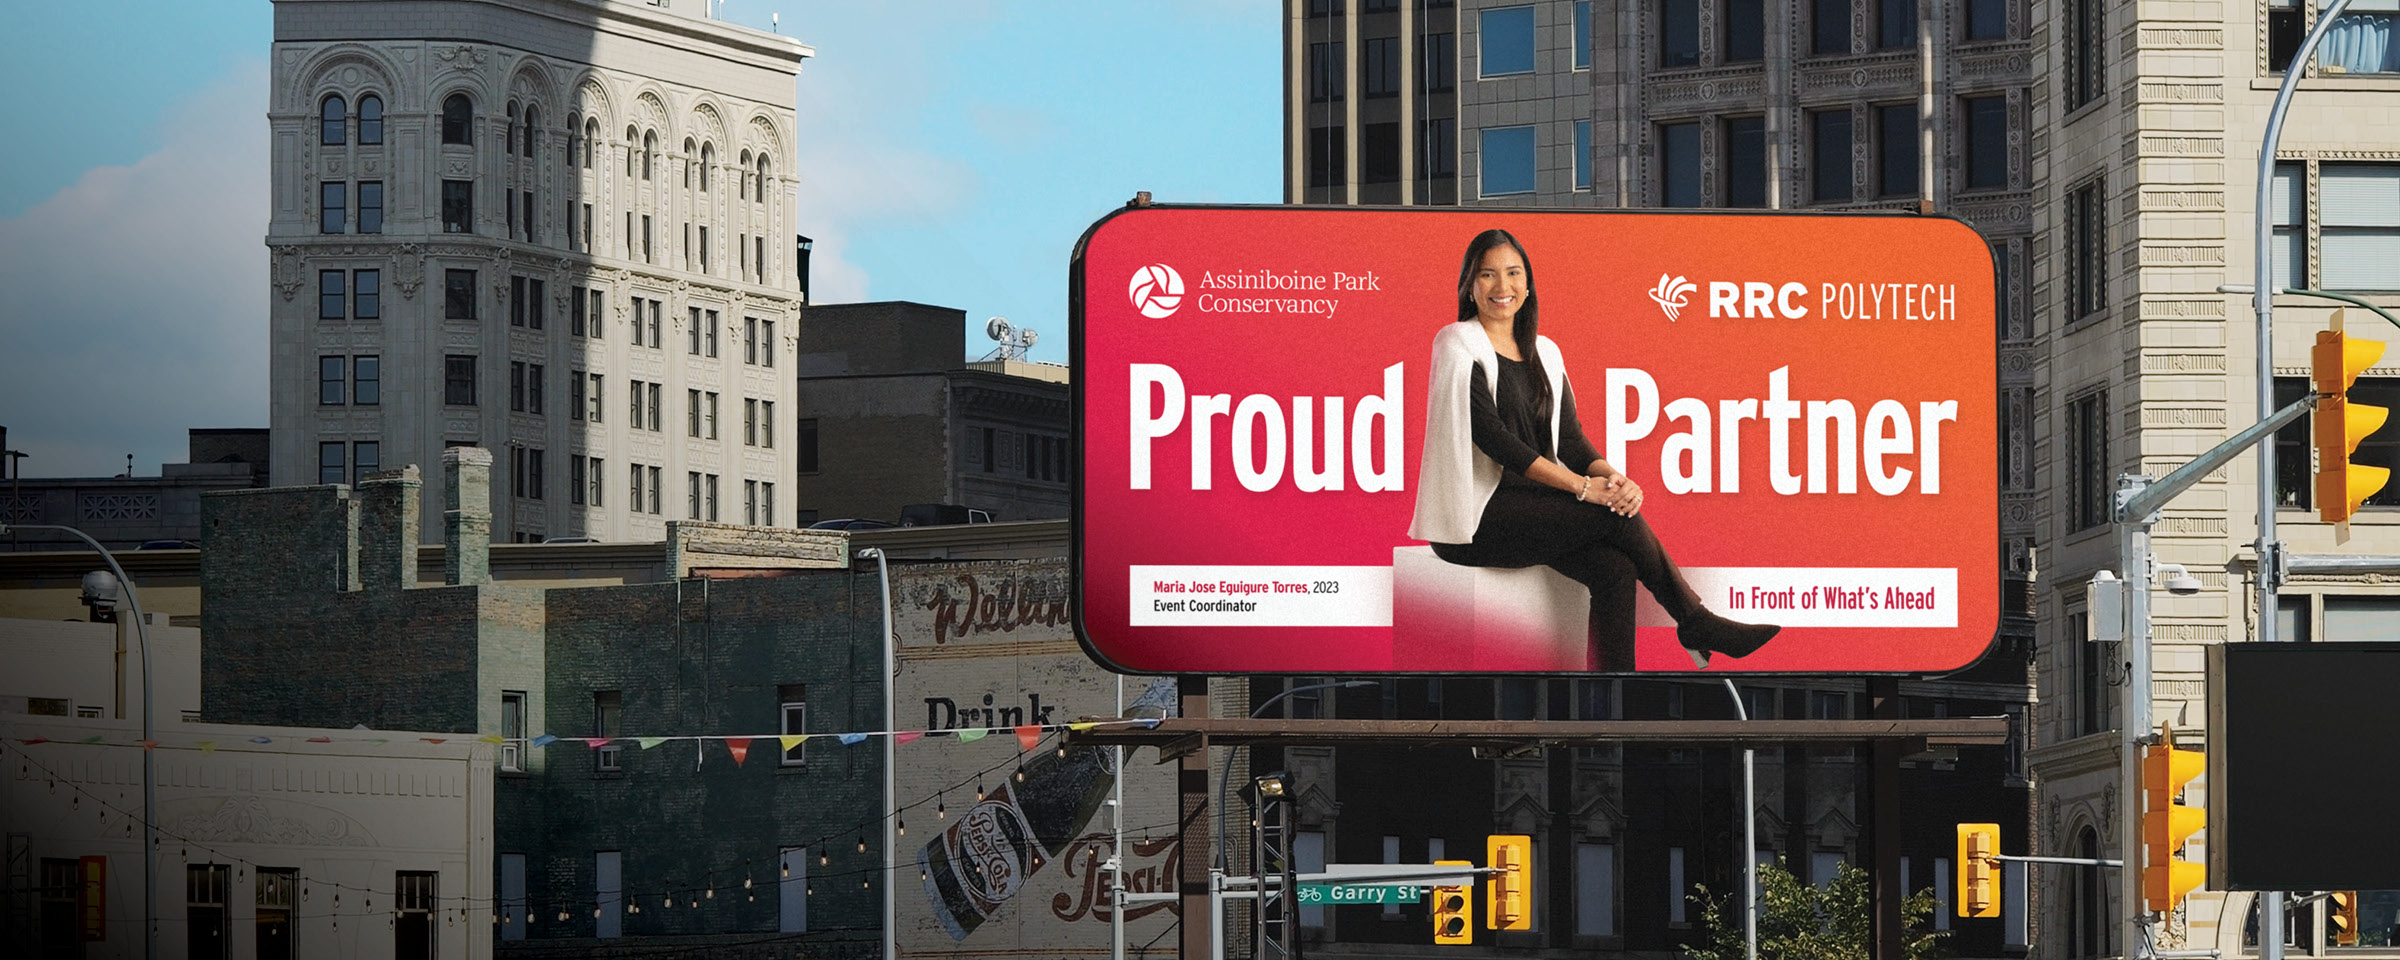 Winnipeg skyline with "Proud Partner" billboard of RRC Polytech graduate Maria Jose Eguigure Torres.